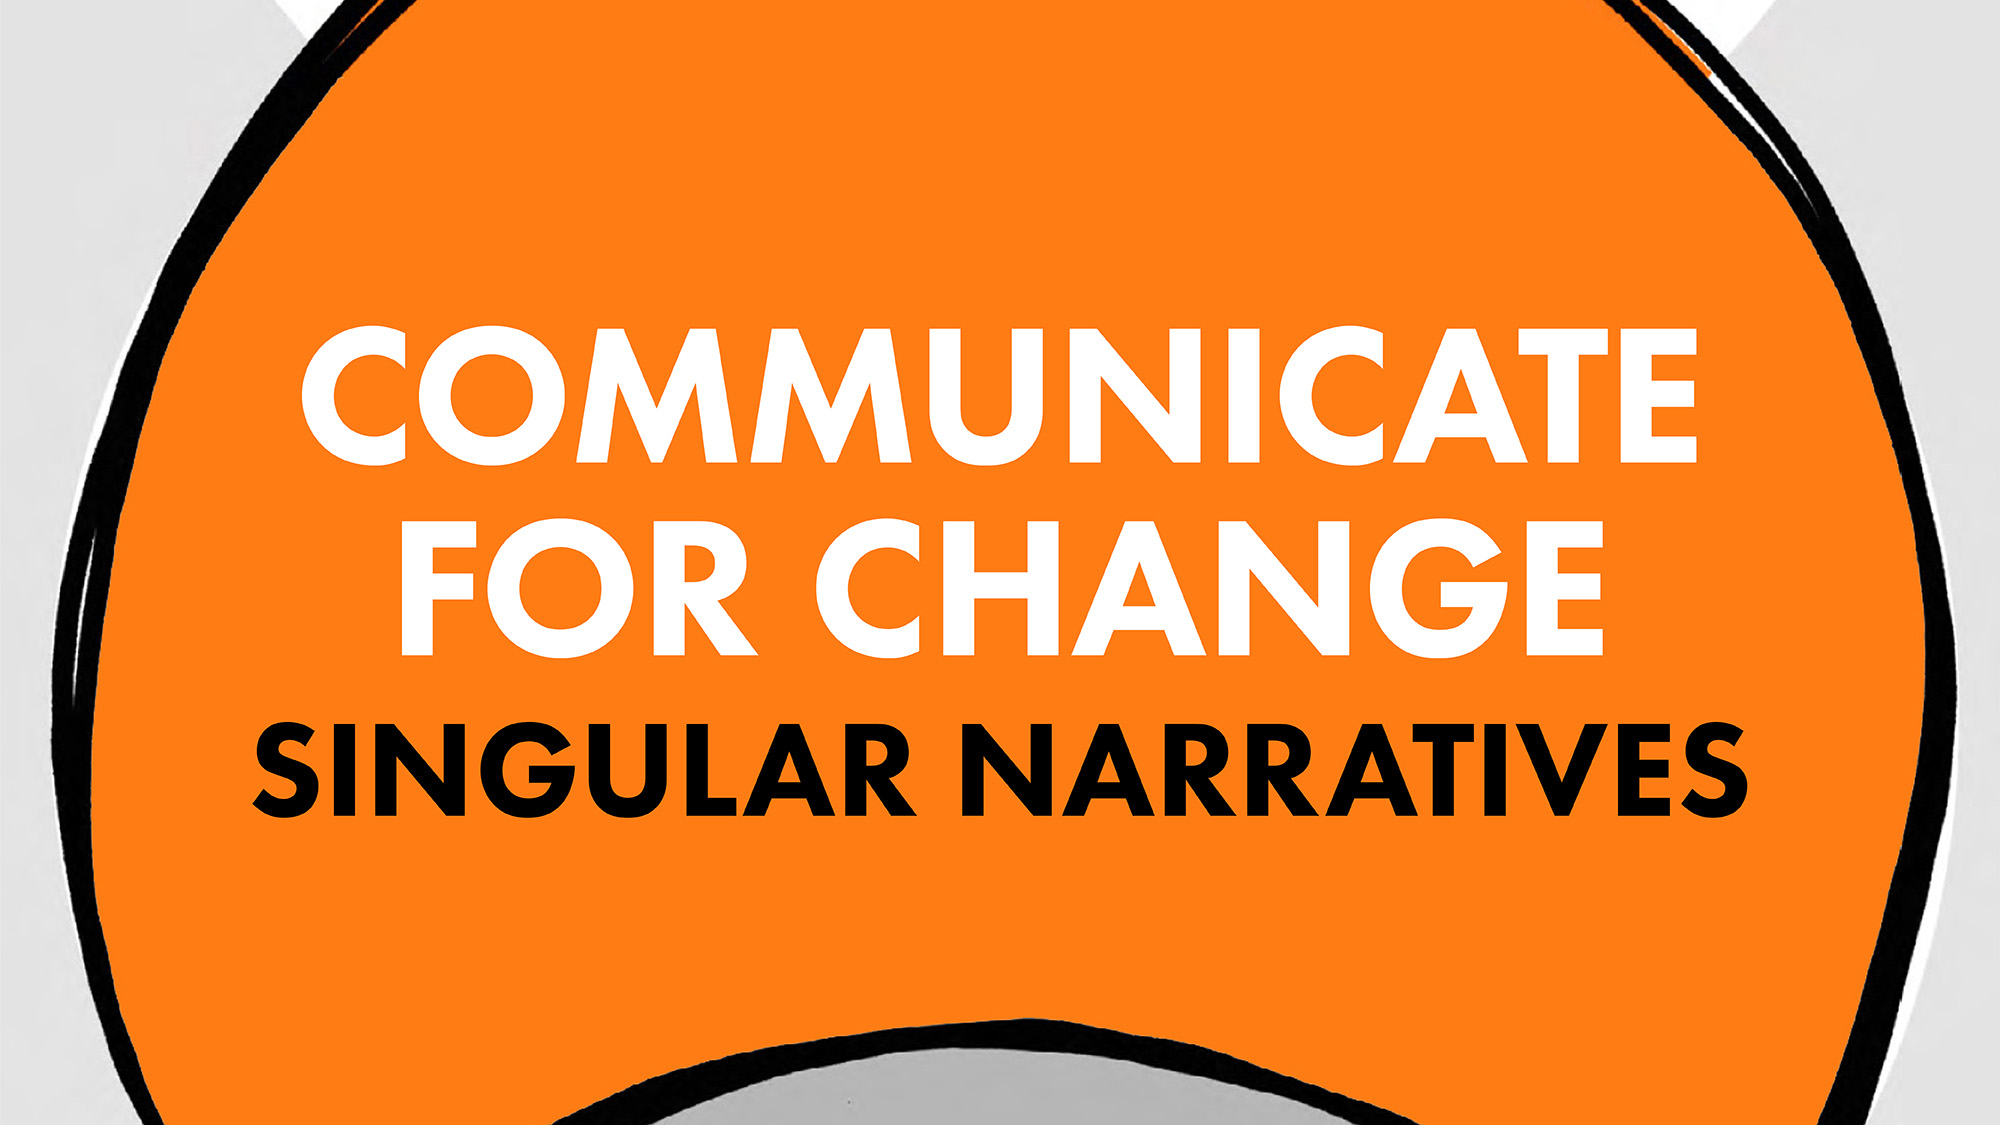  Communicate for Change: Singular Narratives